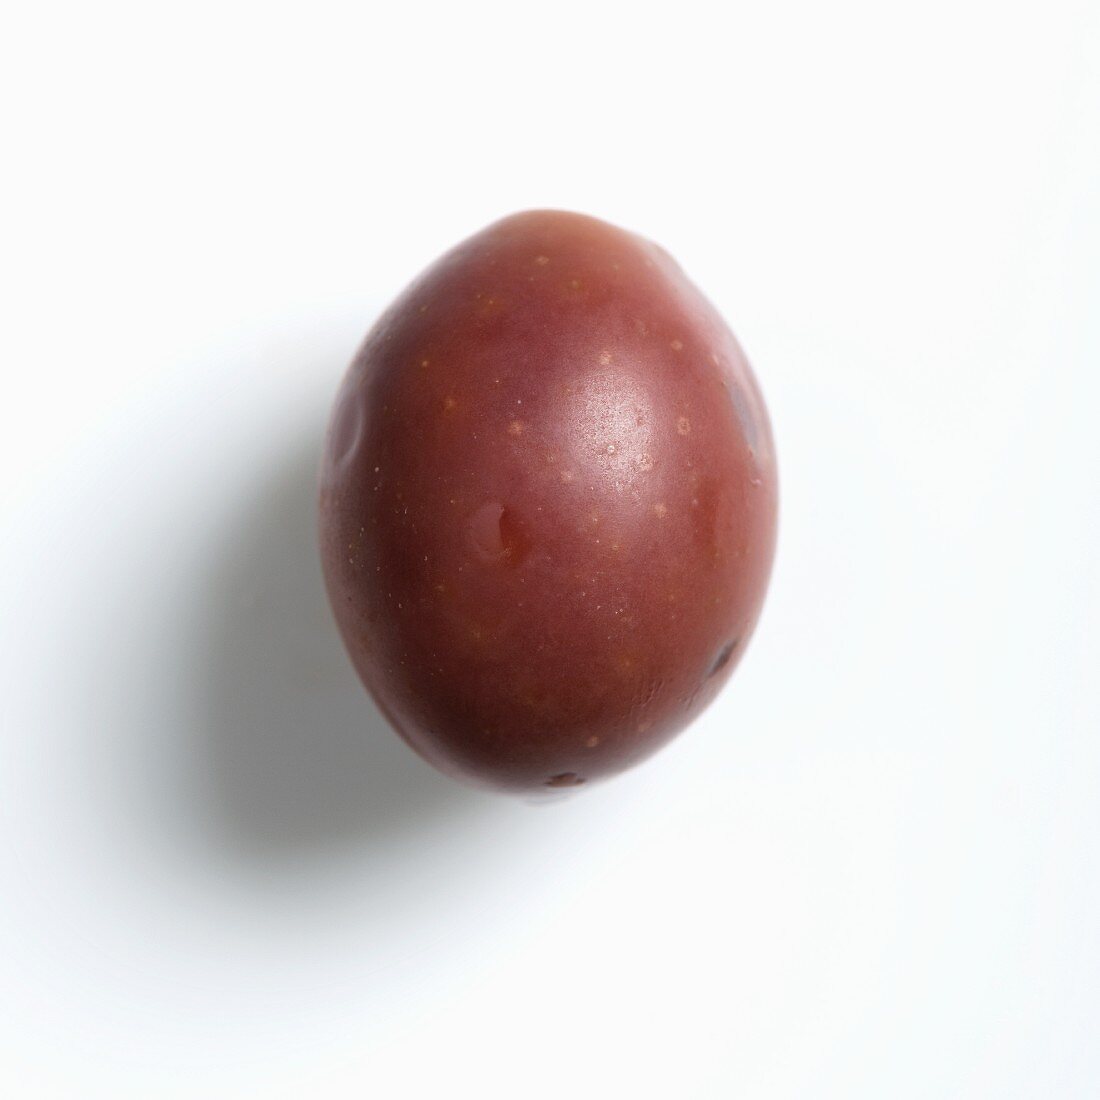 Eine Baresana Olive